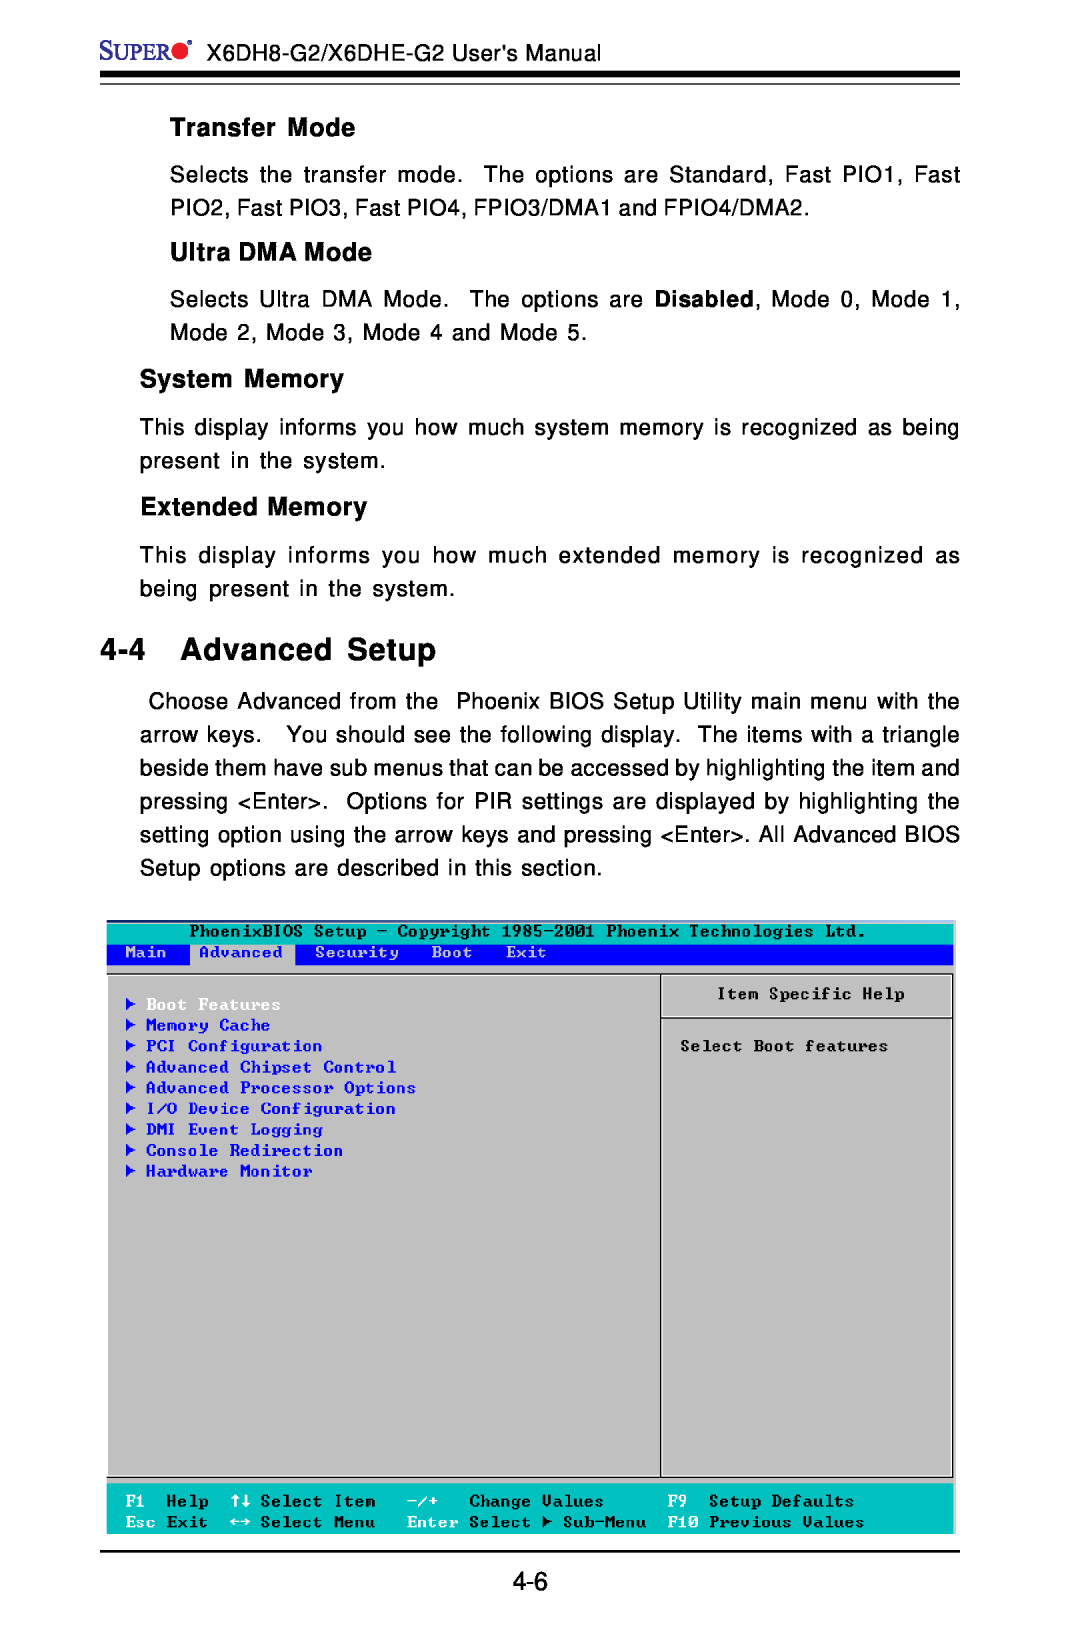 SUPER MICRO Computer X6DH8-G2, X6DHE-G2 manual Advanced Setup, Transfer Mode, Ultra DMA Mode, System Memory, Extended Memory 